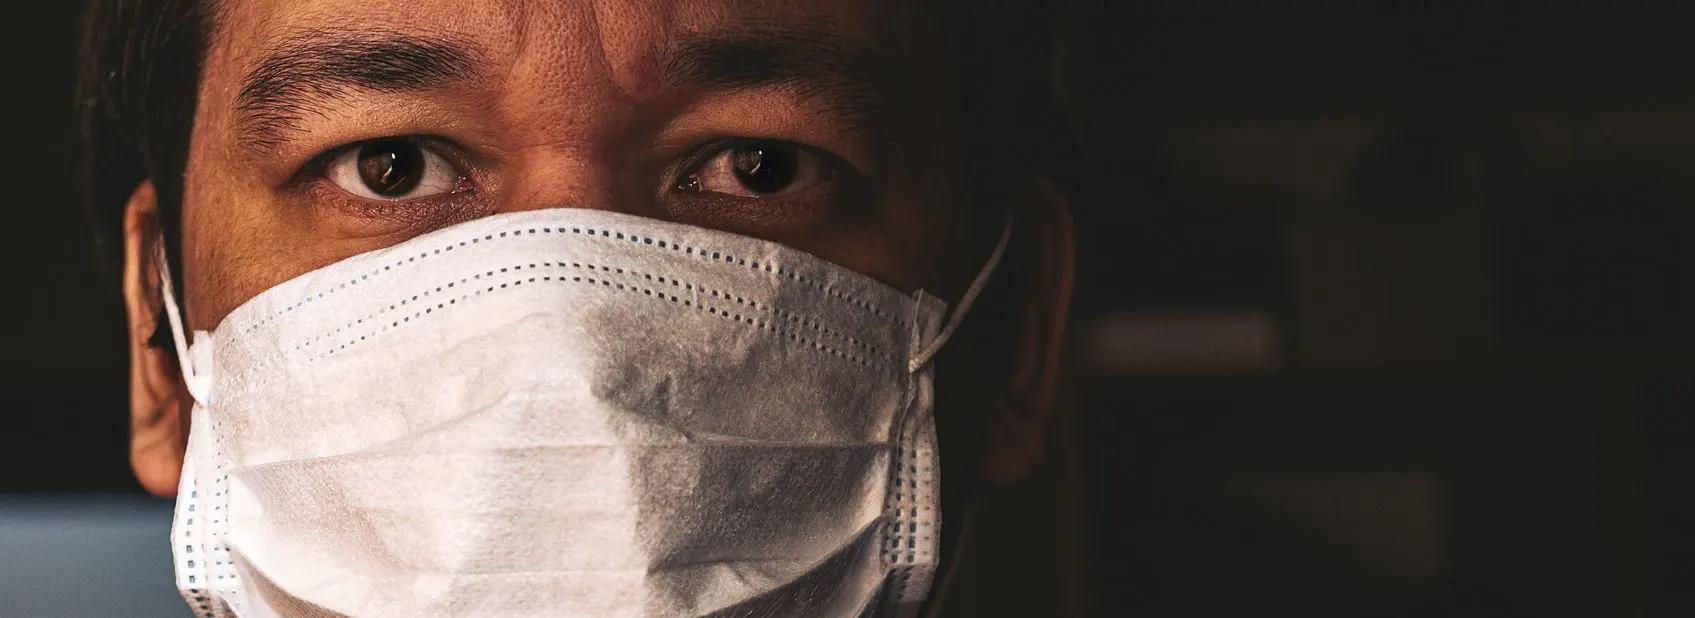 Watch: Millions Against Medical Mandates offers 'crash course on face masks'